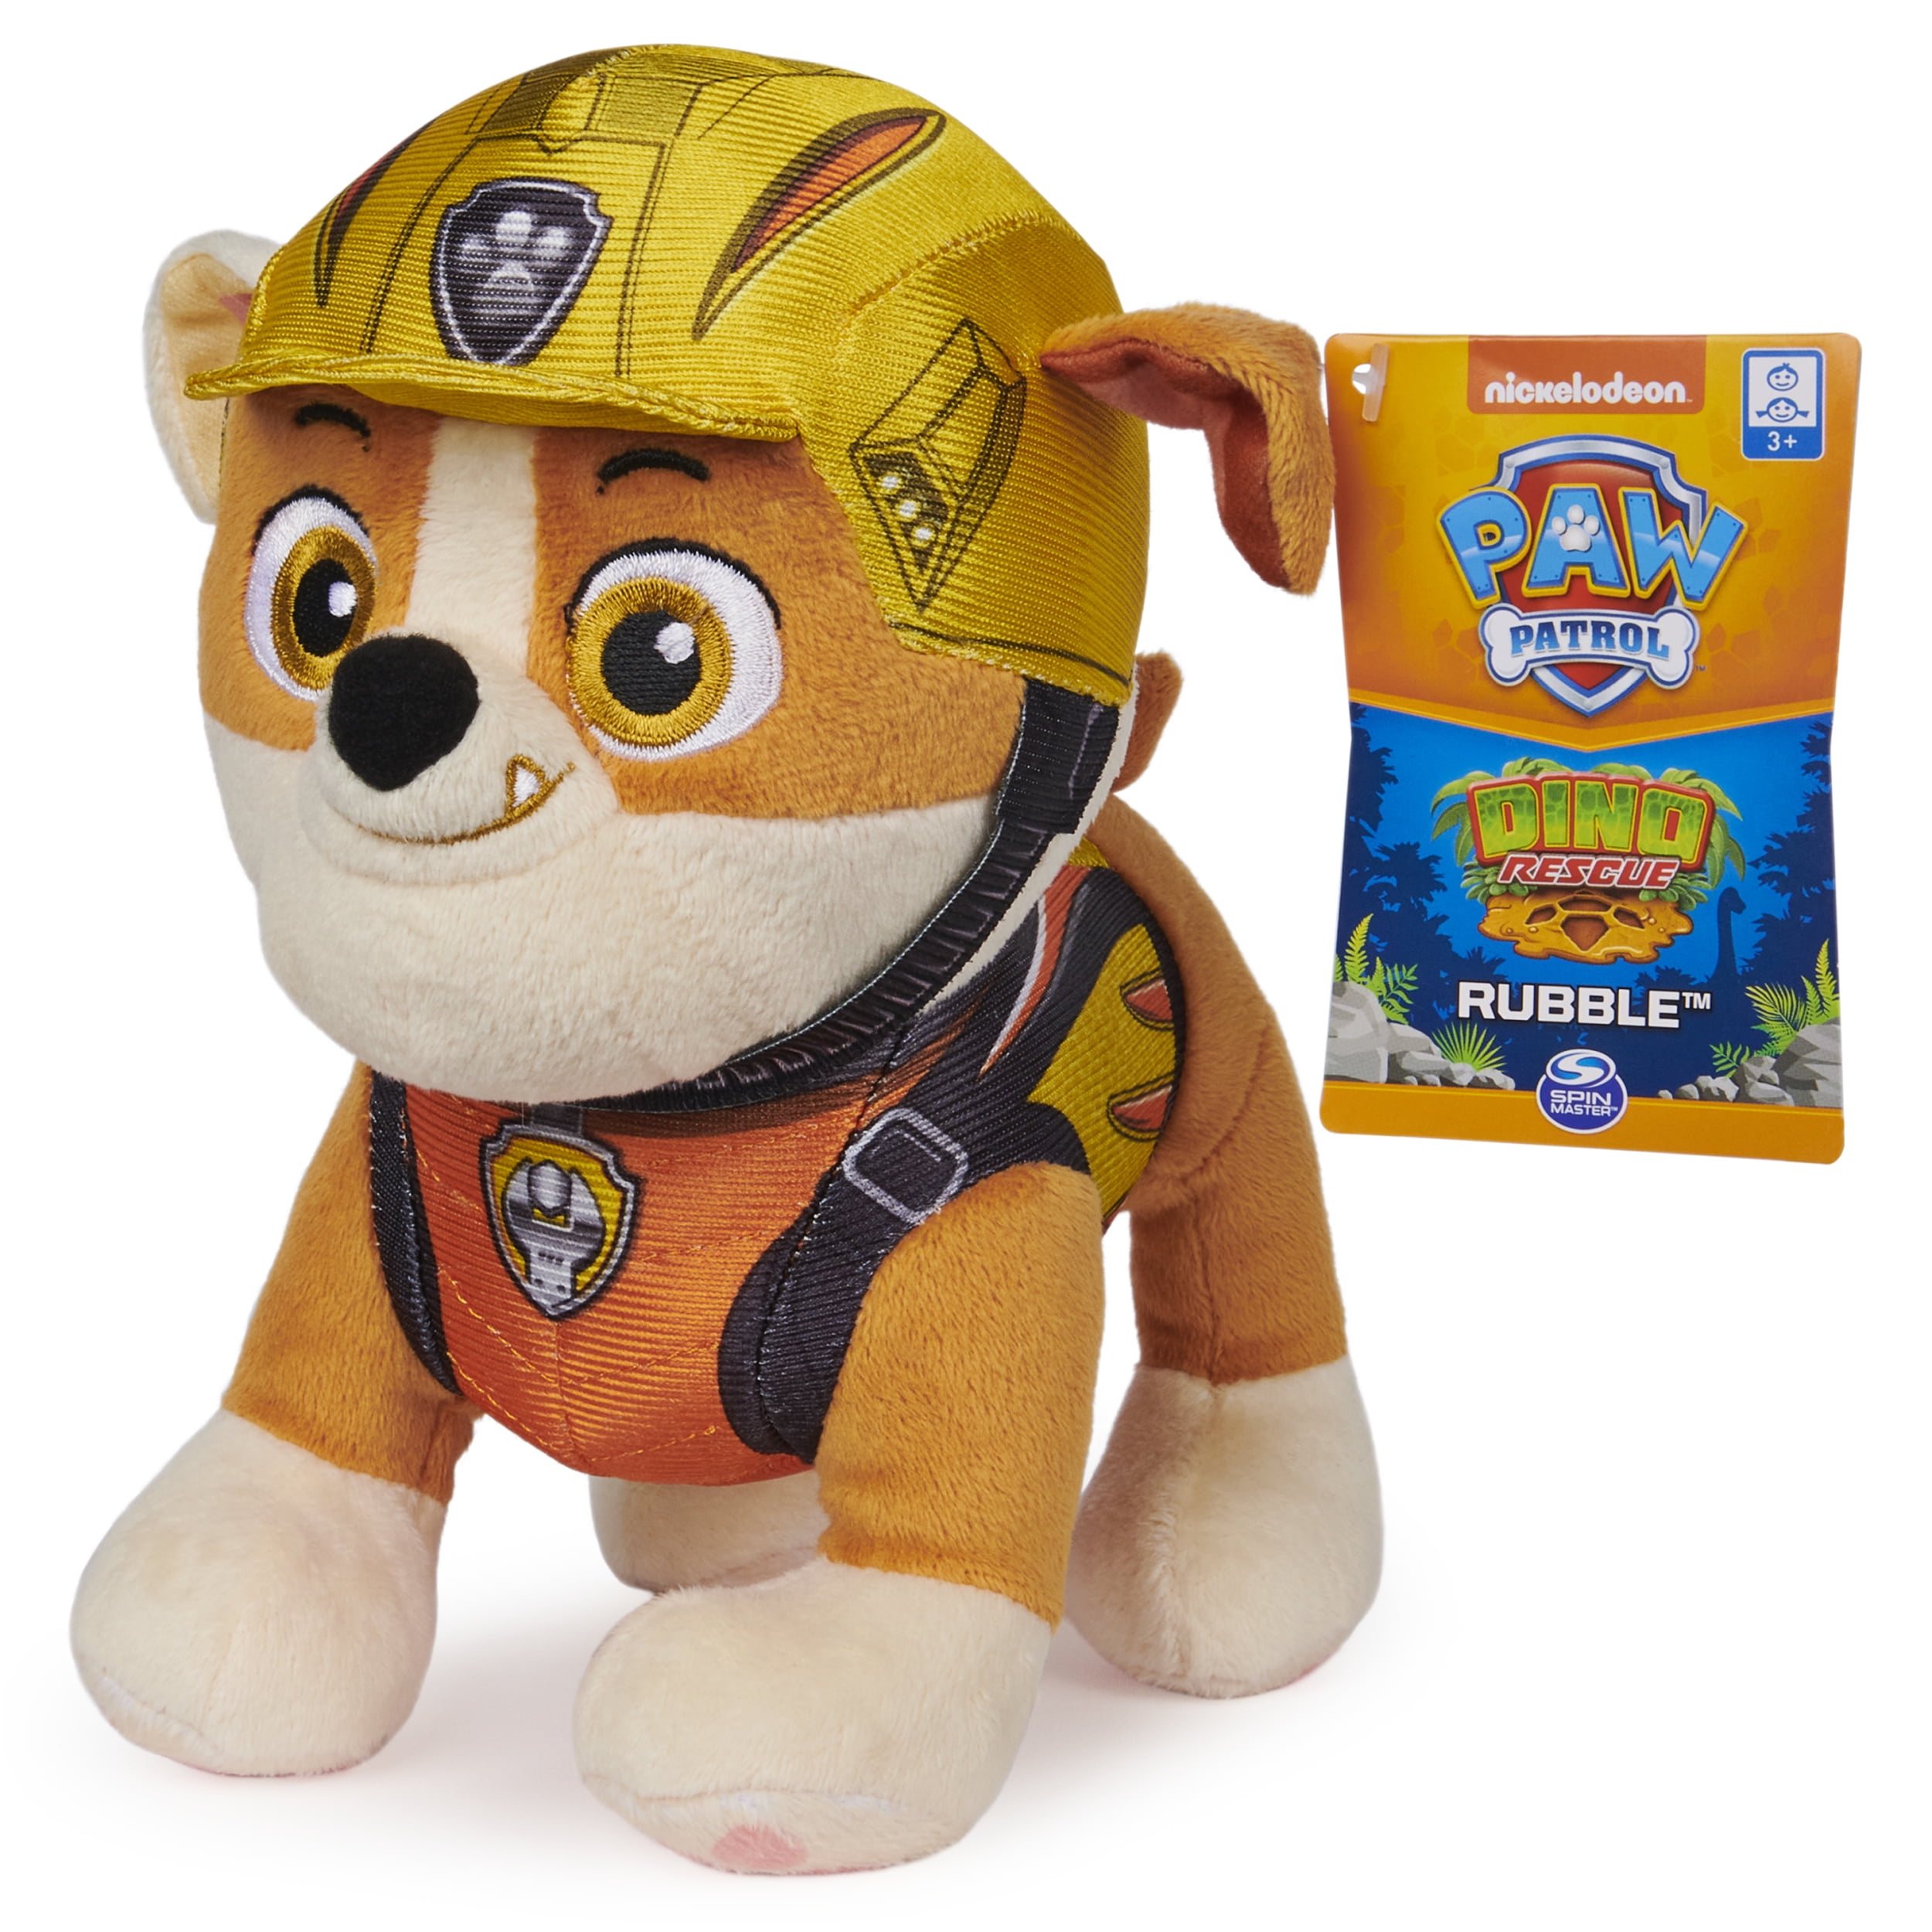 PAW Patrol, Dino Rubble, Stuffed Animal Plush Toy, Walmart.com